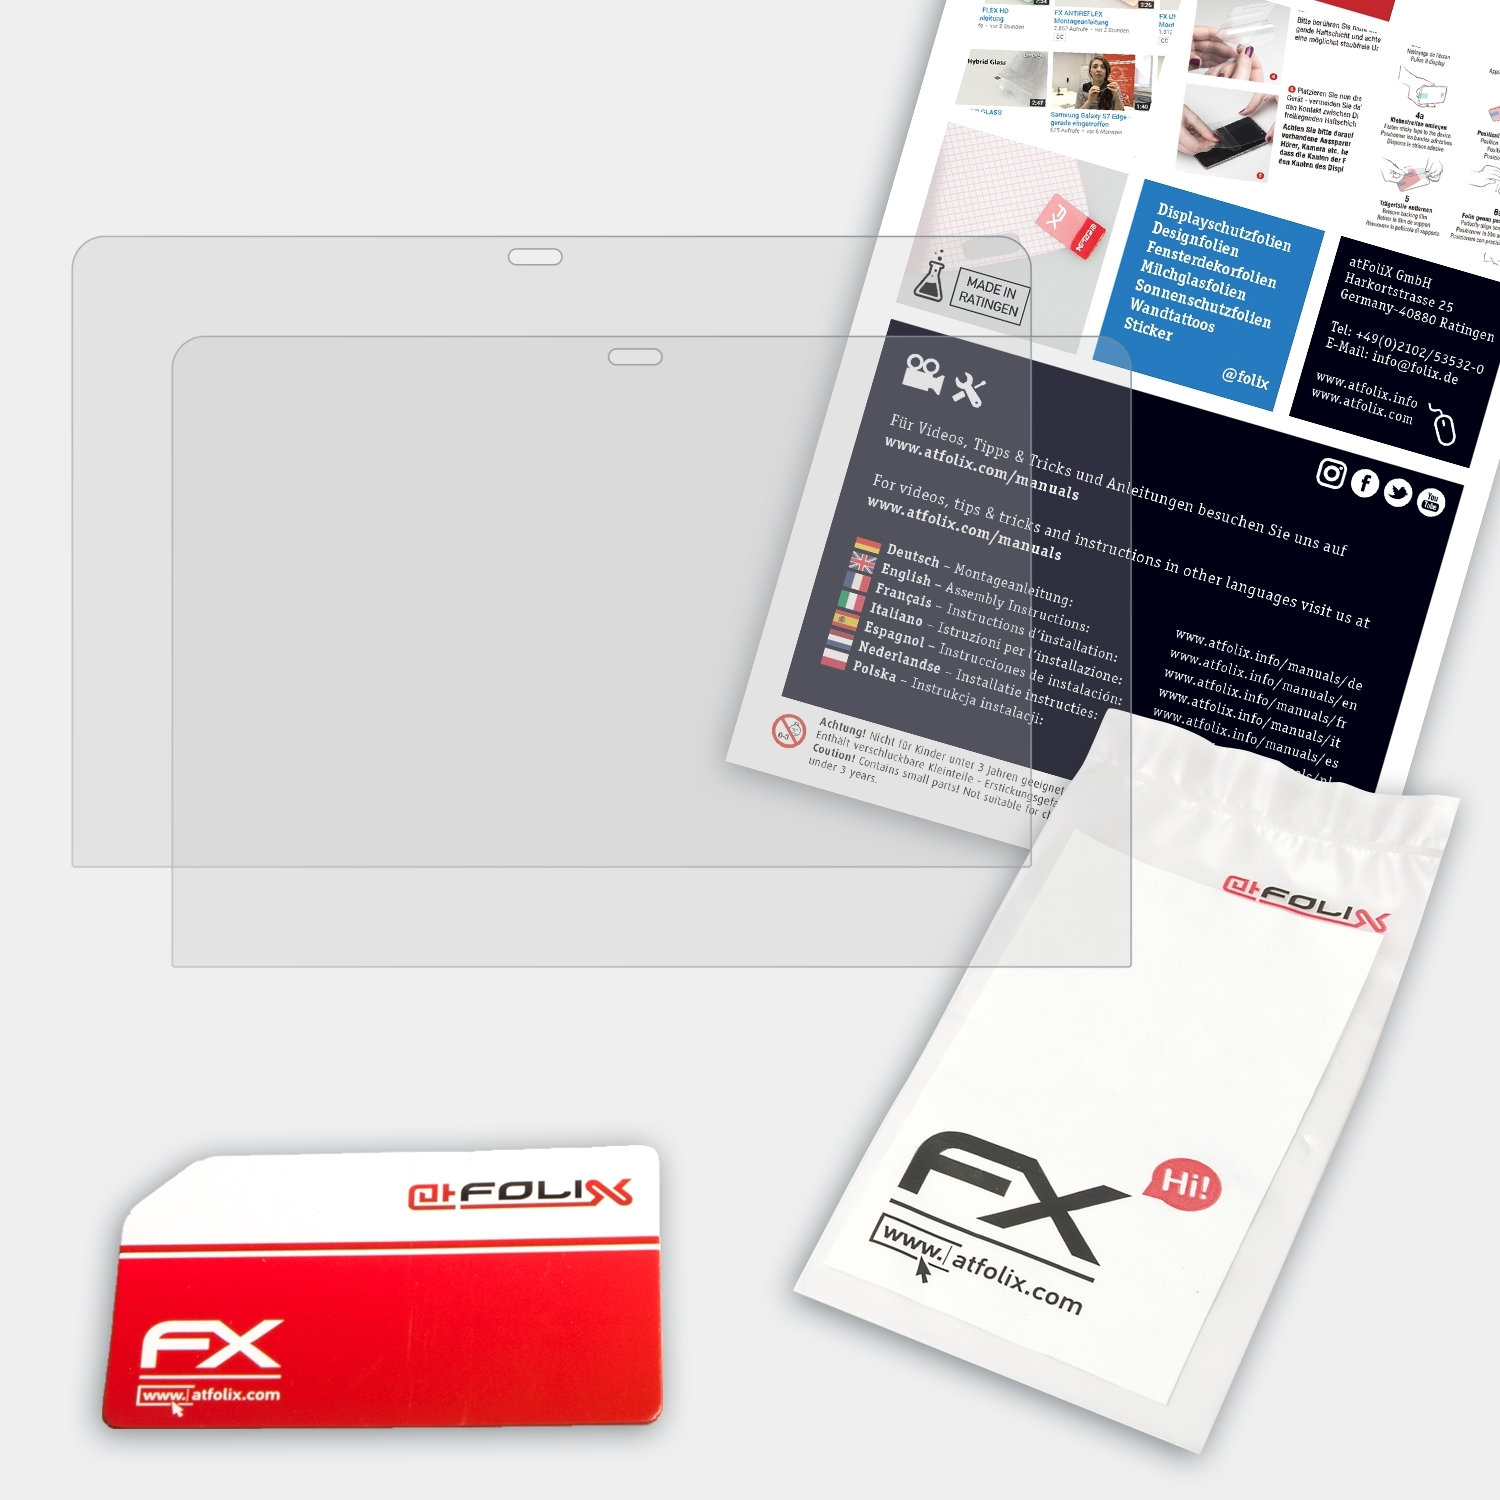 FX-Antireflex Displayschutz(für ATFOLIX Asus 2x VivoBook Flip (TP410UA)) 14